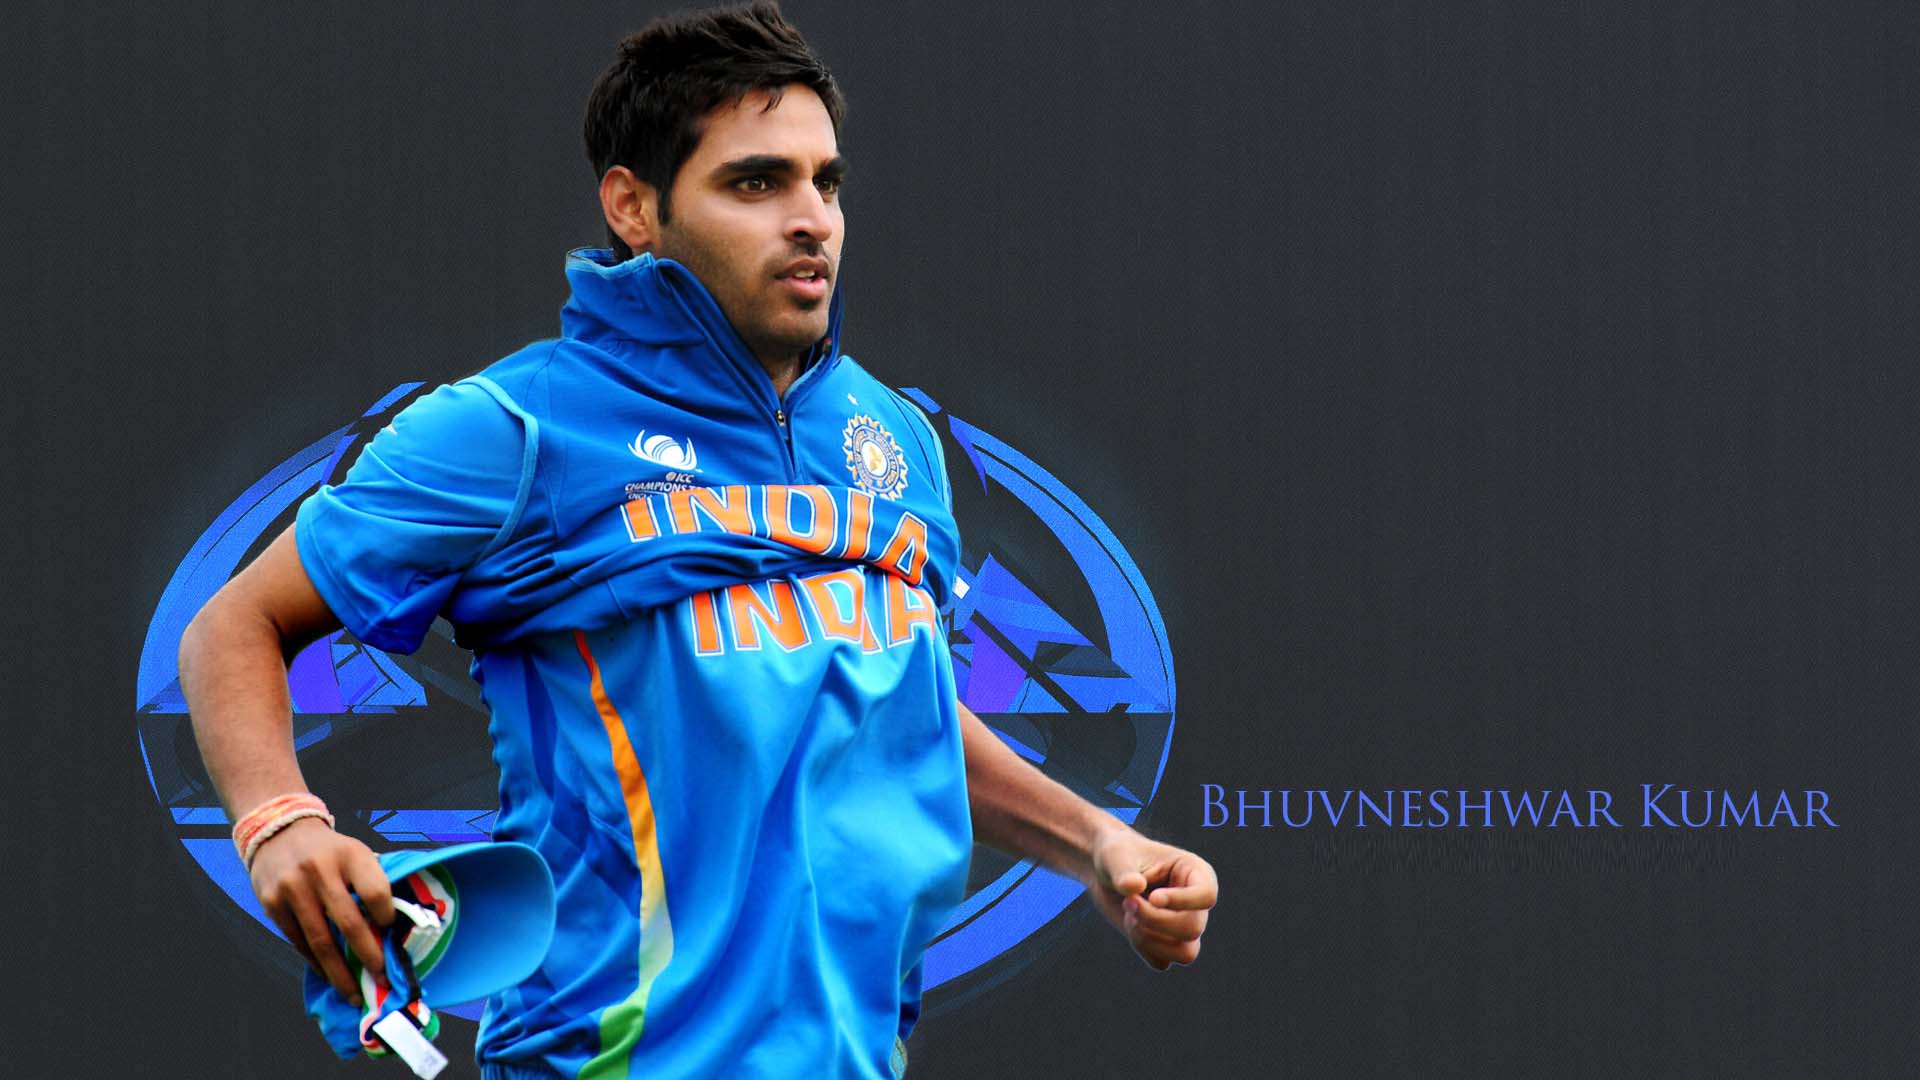 bhuvneshwar kumar indian cricketer HD wallpaper Indian cricketer